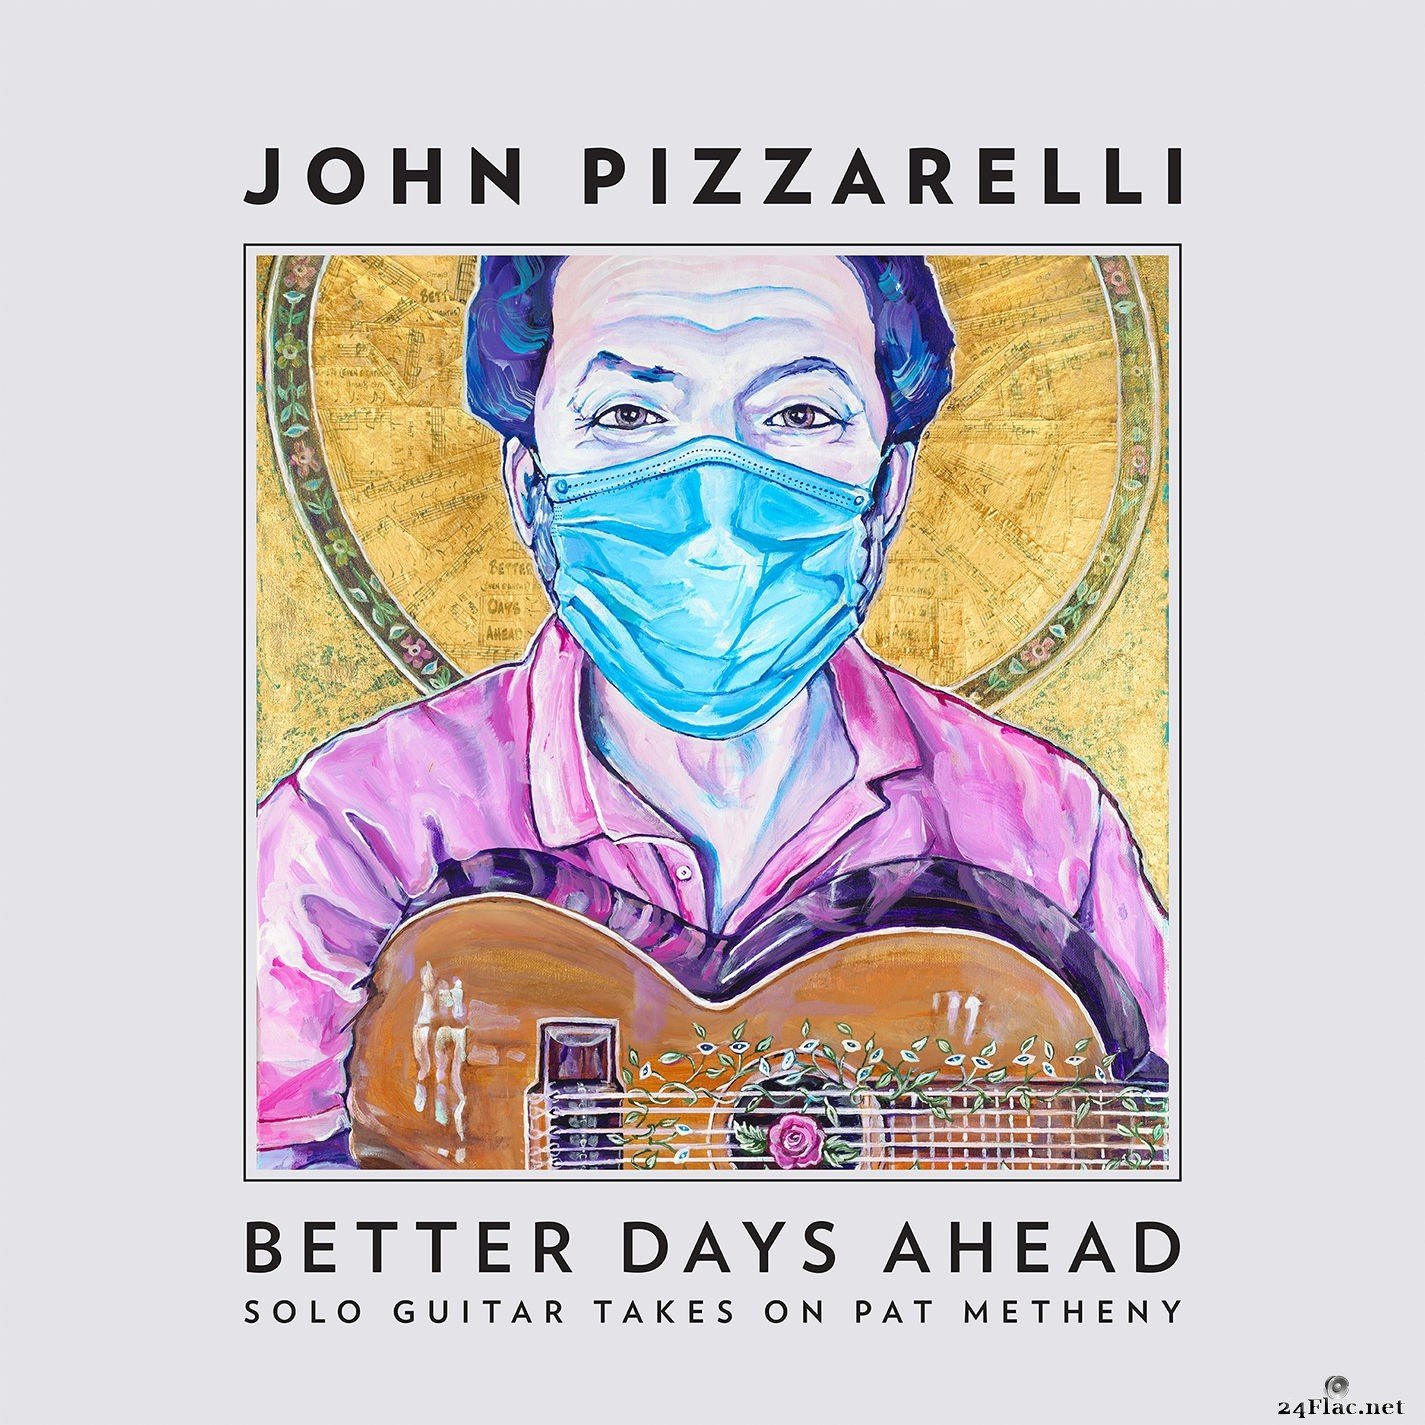 John Pizzarelli - Better Days Ahead (Solo Guitar Takes on Pat Metheny) (2021) Hi-Res